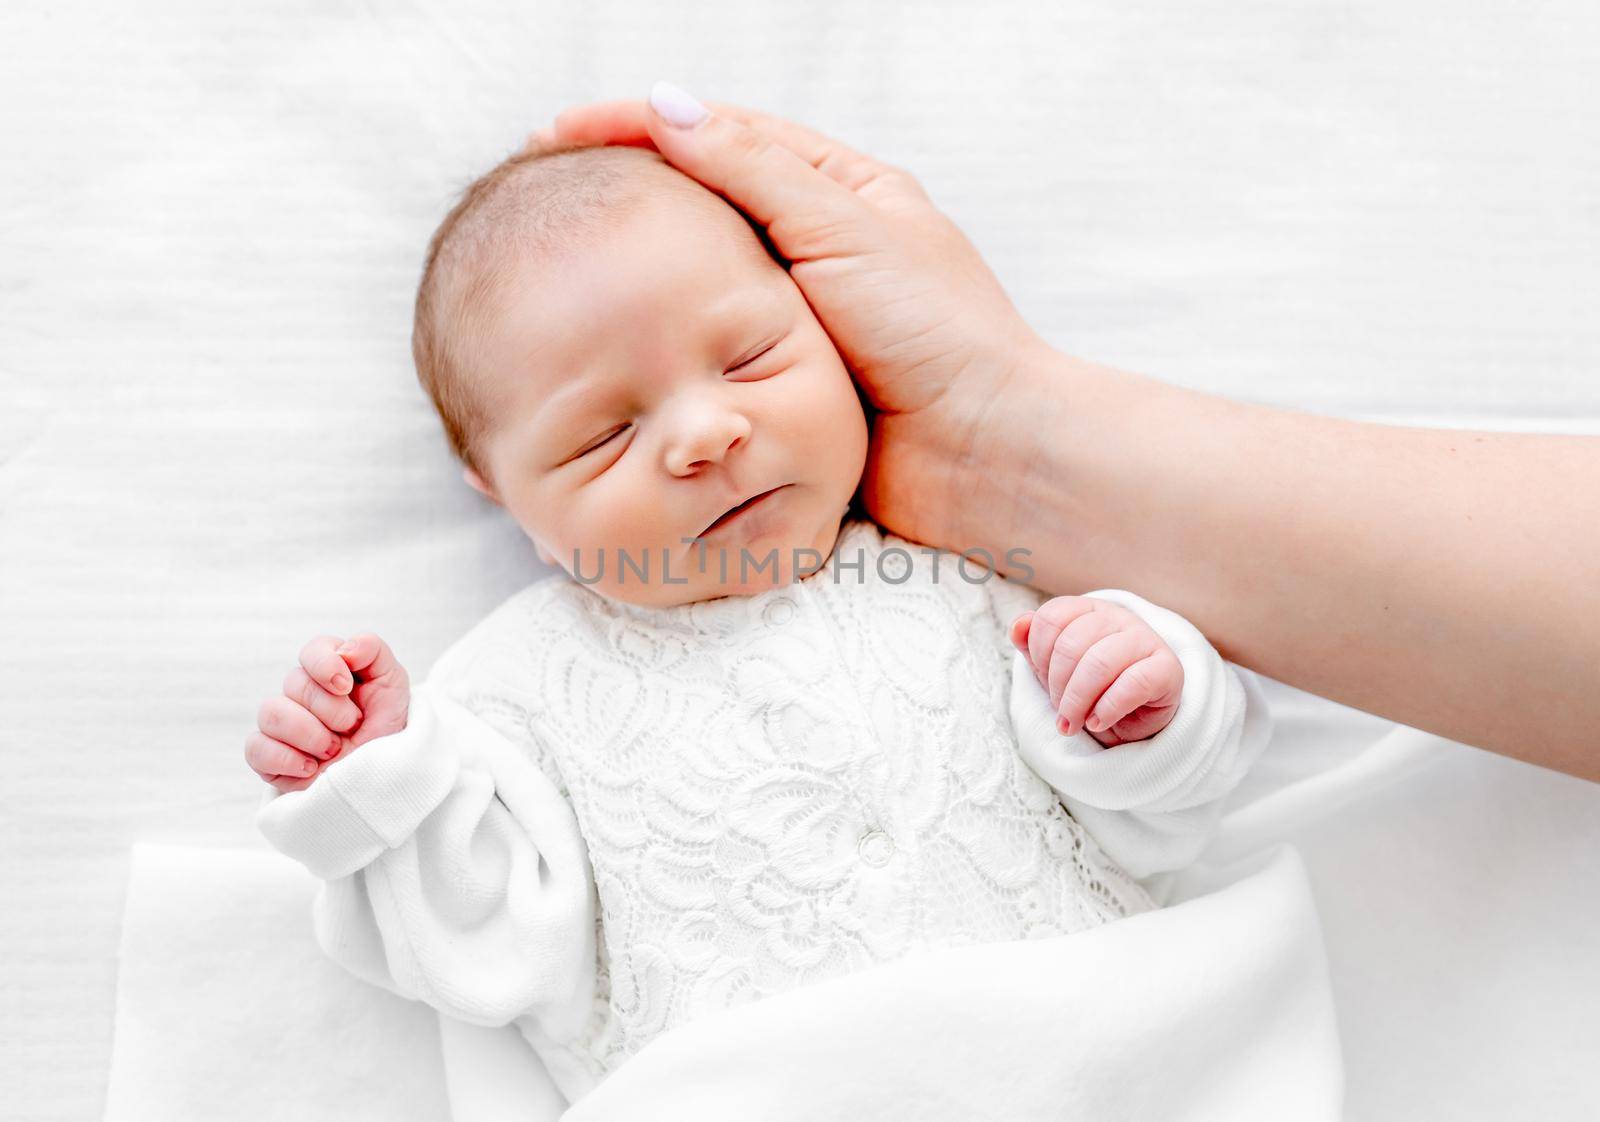 Newborn baby and mother hand by tan4ikk1